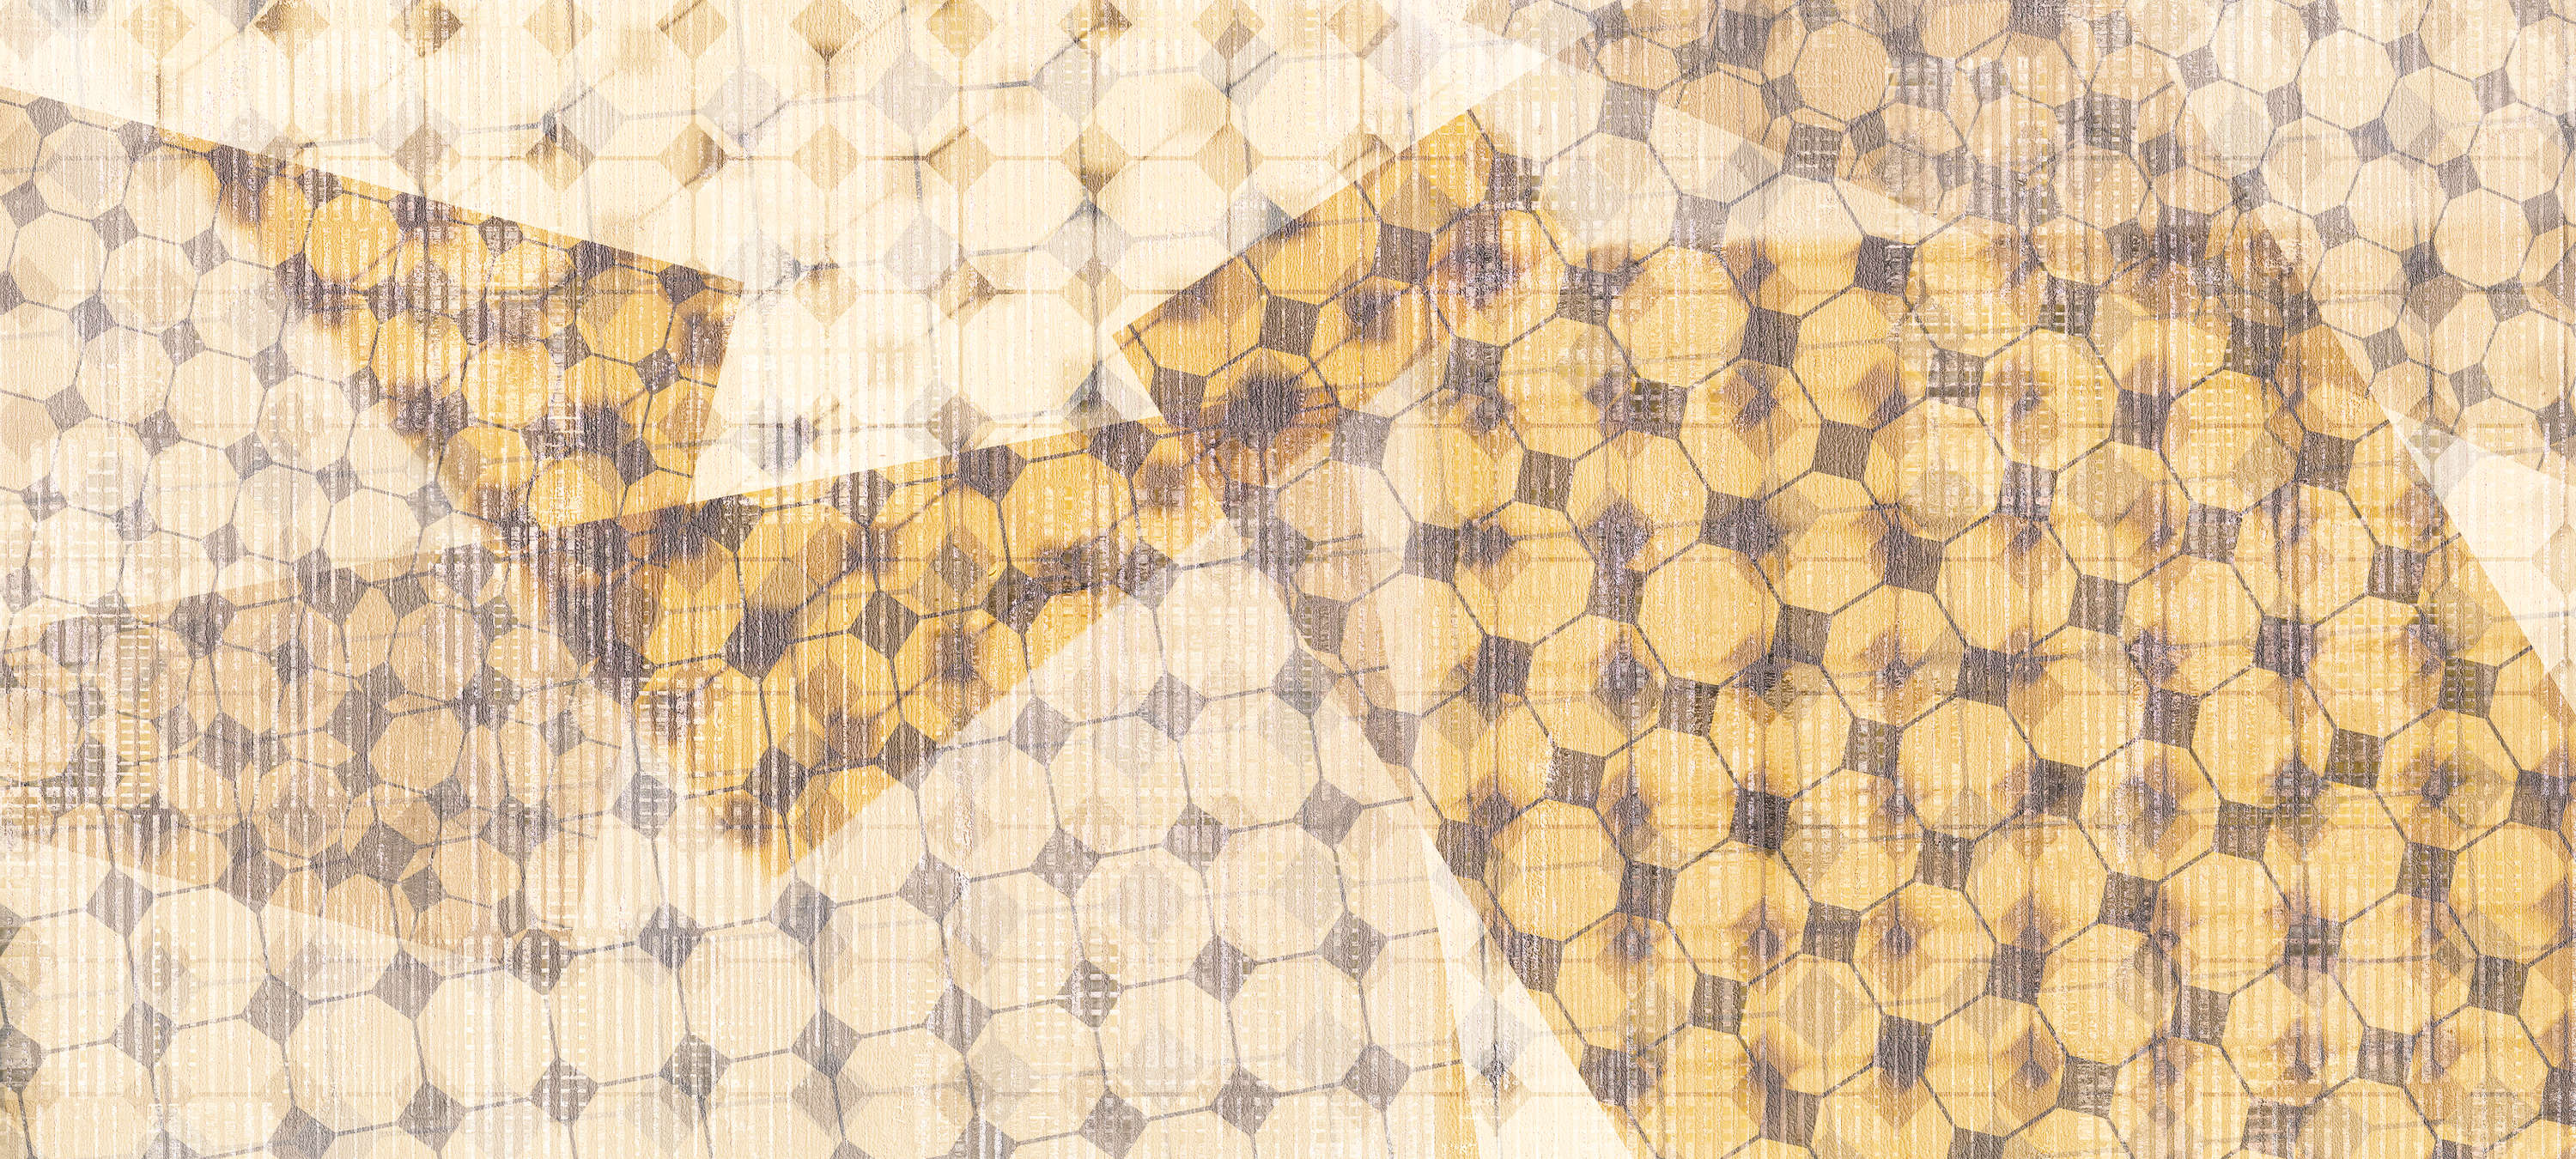             Laagjeseffect & Geometrisch Patroon Behang - Geel, Oranje, Wit
        